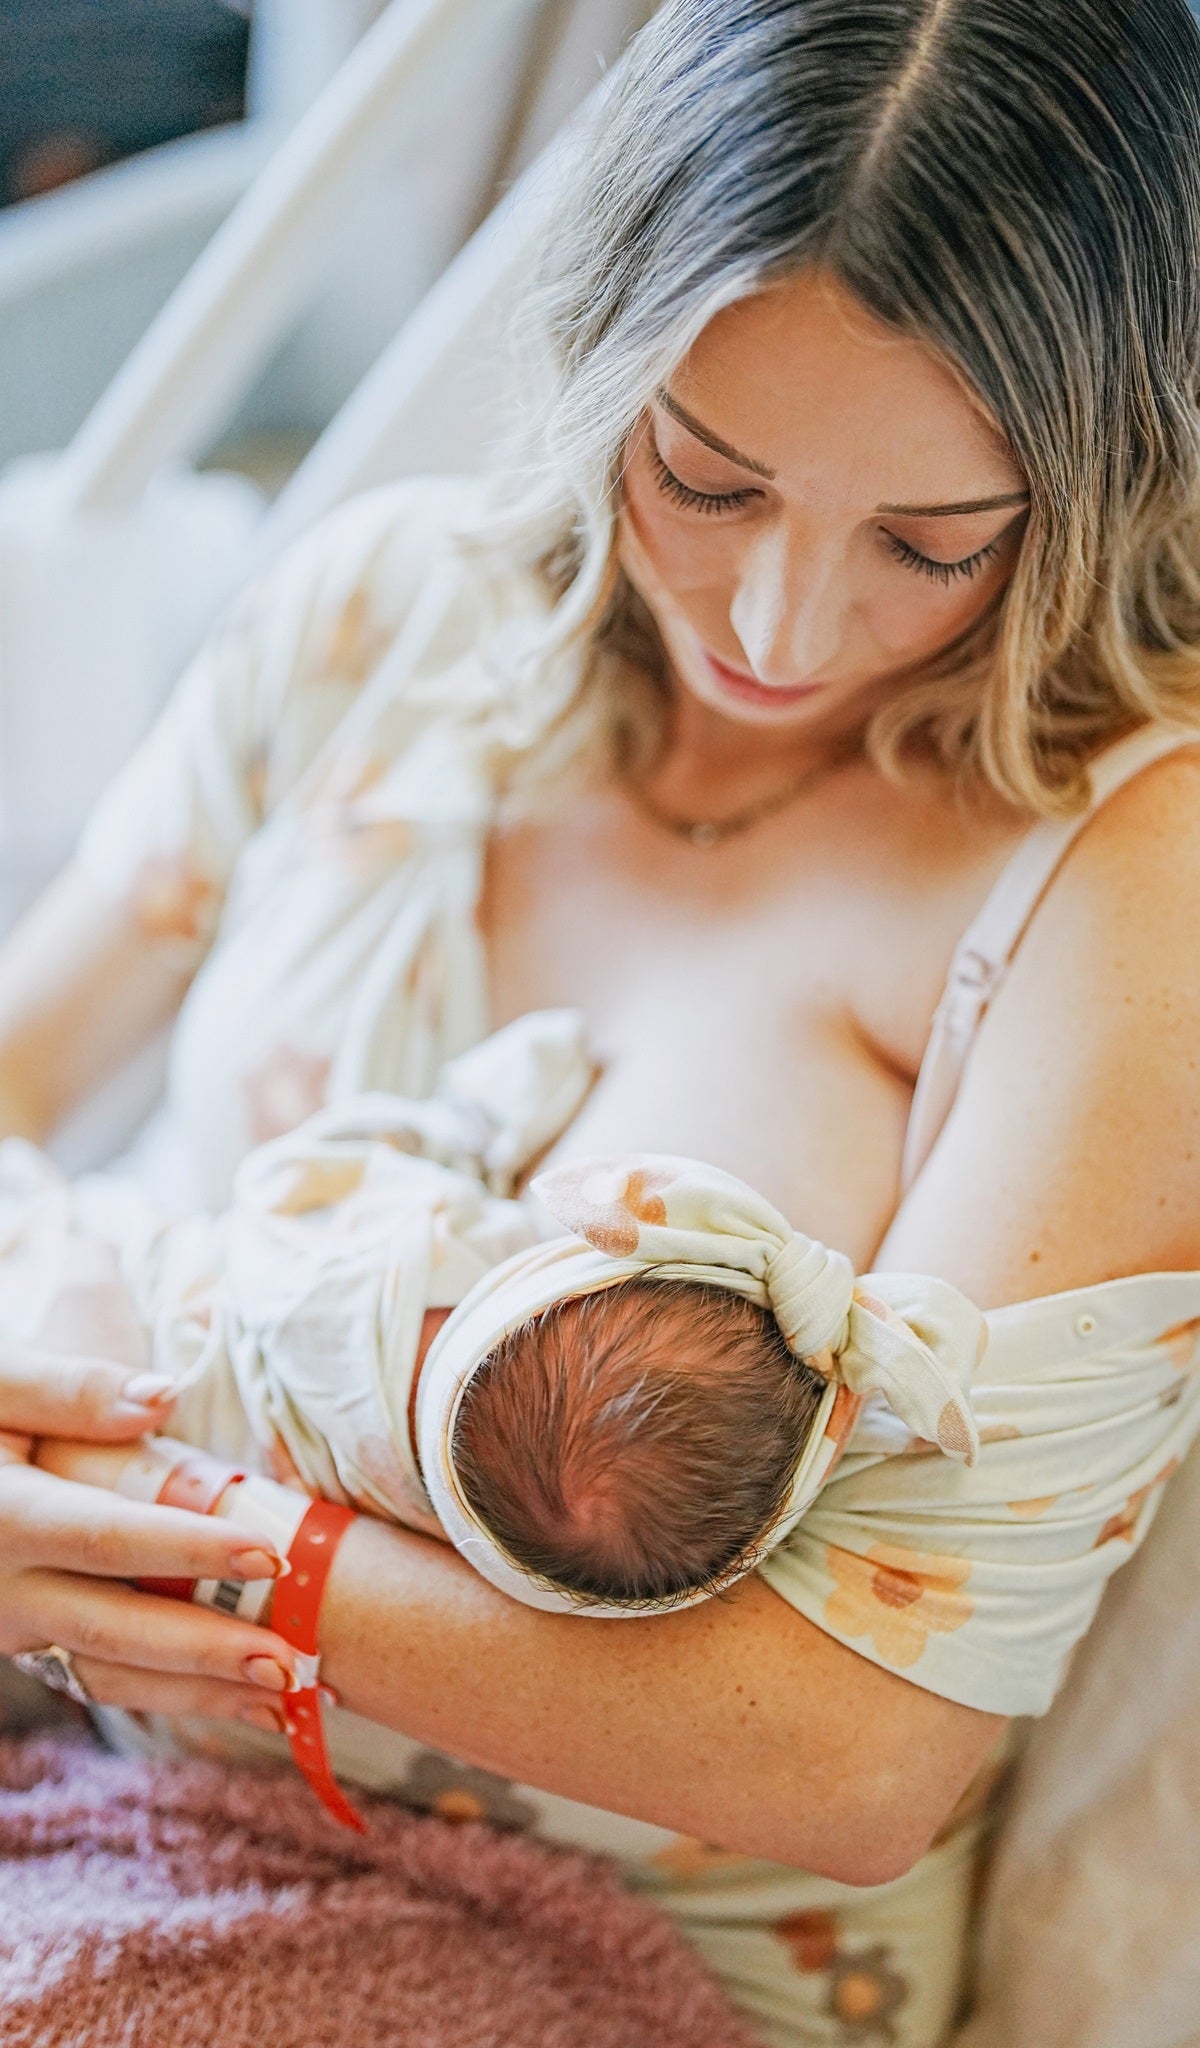 Daisies Rosa hospital gown worn by woman breastfeeding her newborn baby.